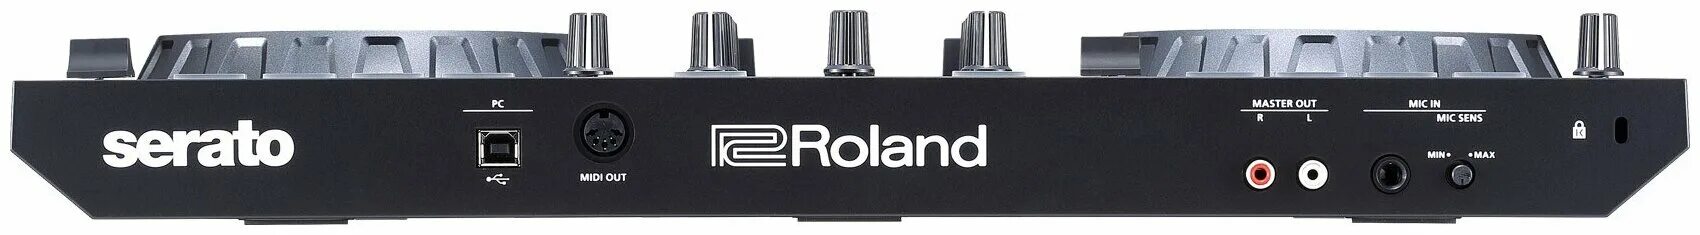 Roland DJ-202. Roland DJ контроллер. DJ пульт Roland. Roland Aira DJ-202. Master out